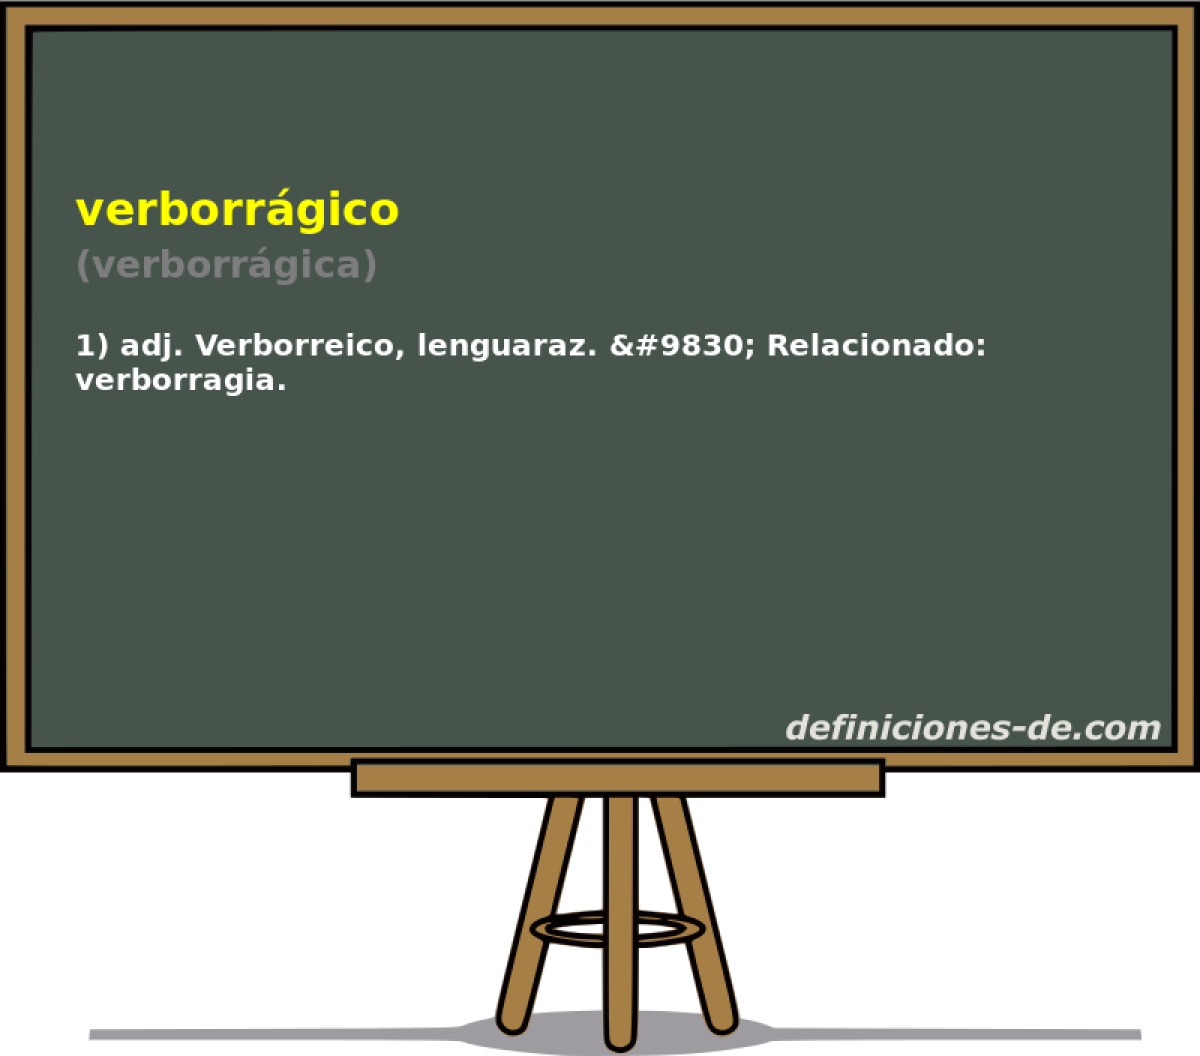 verborrgico (verborrgica)